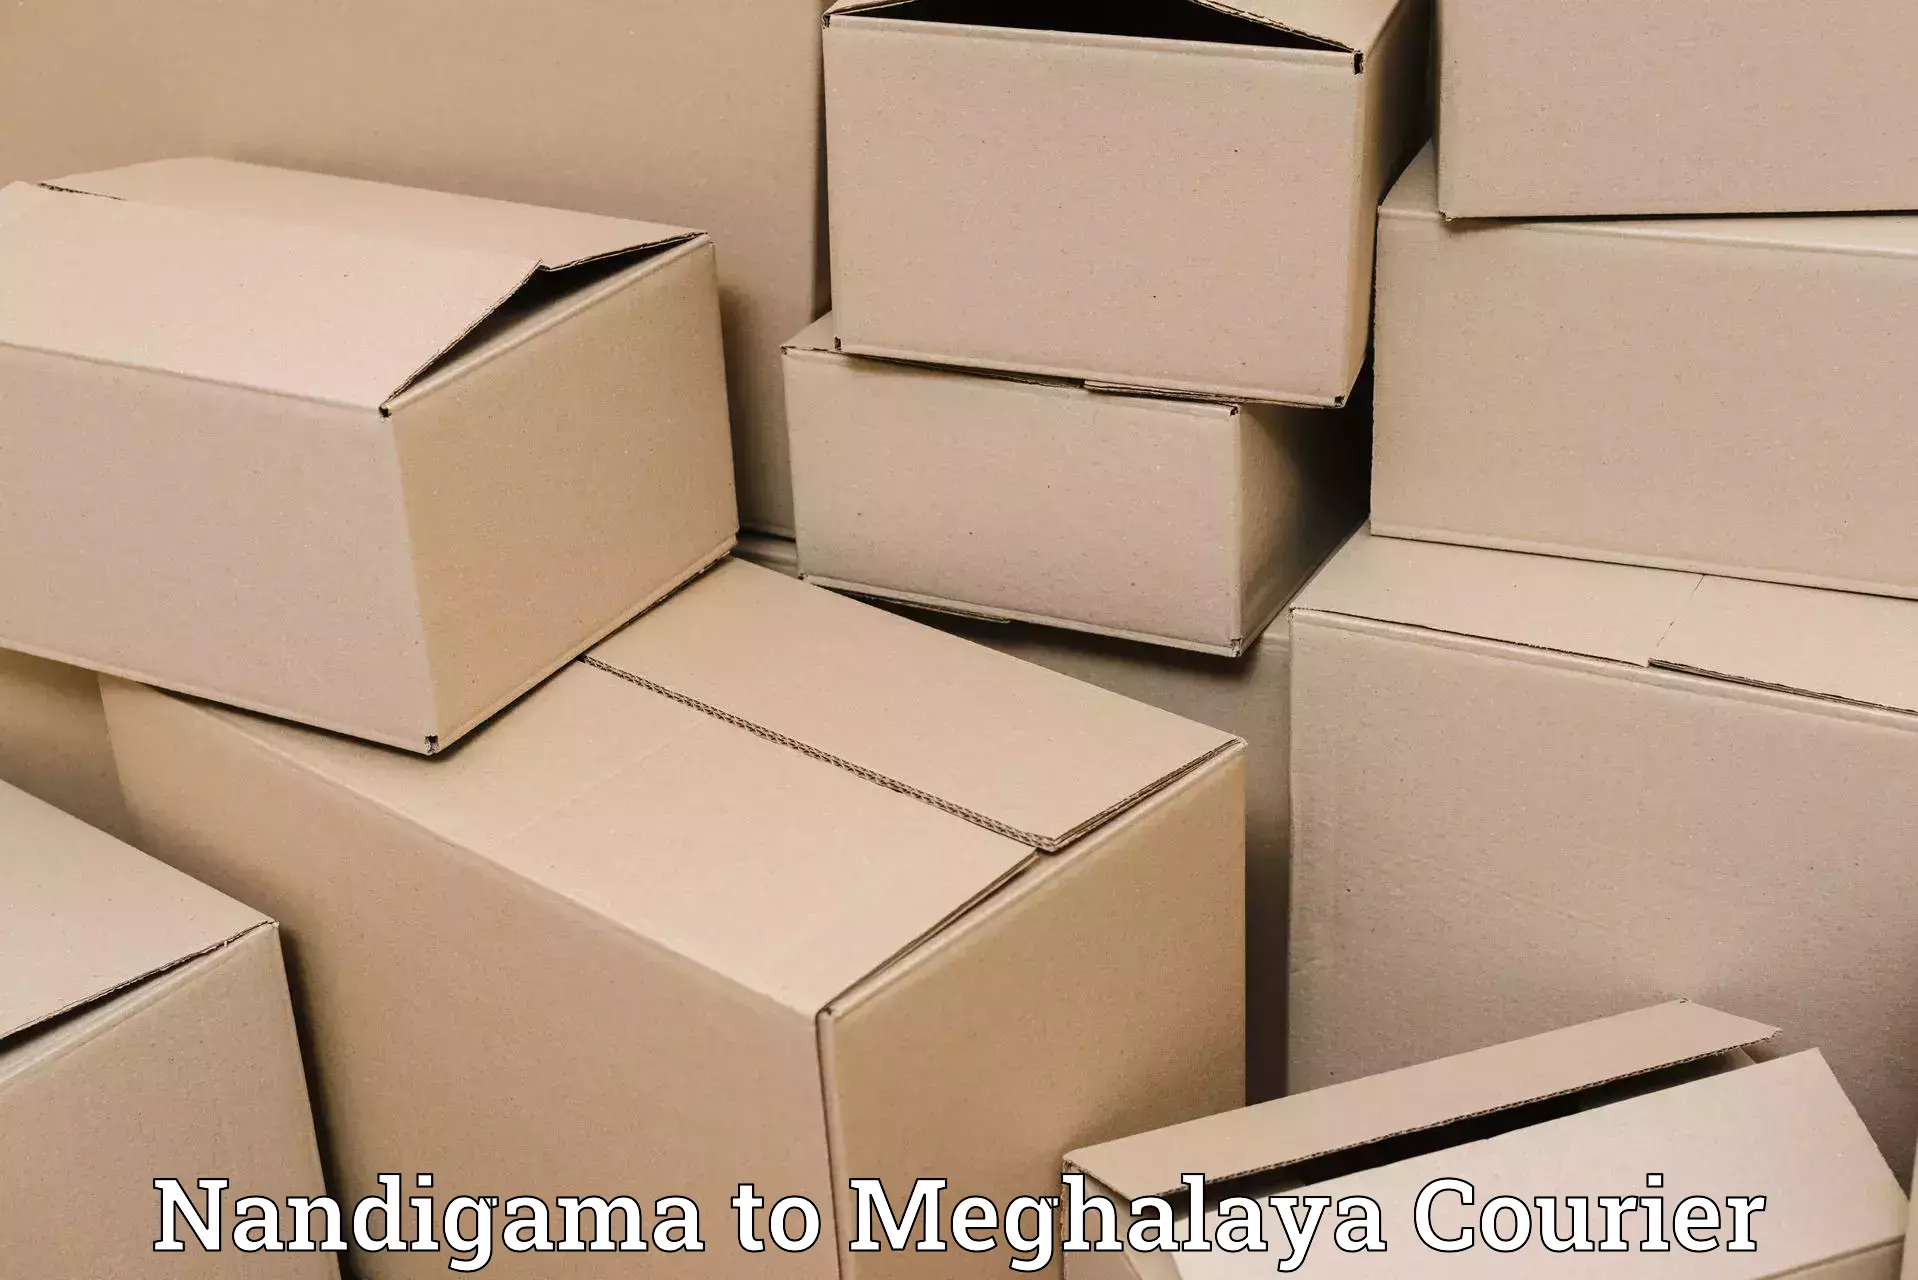 Supply chain efficiency in Nandigama to Meghalaya